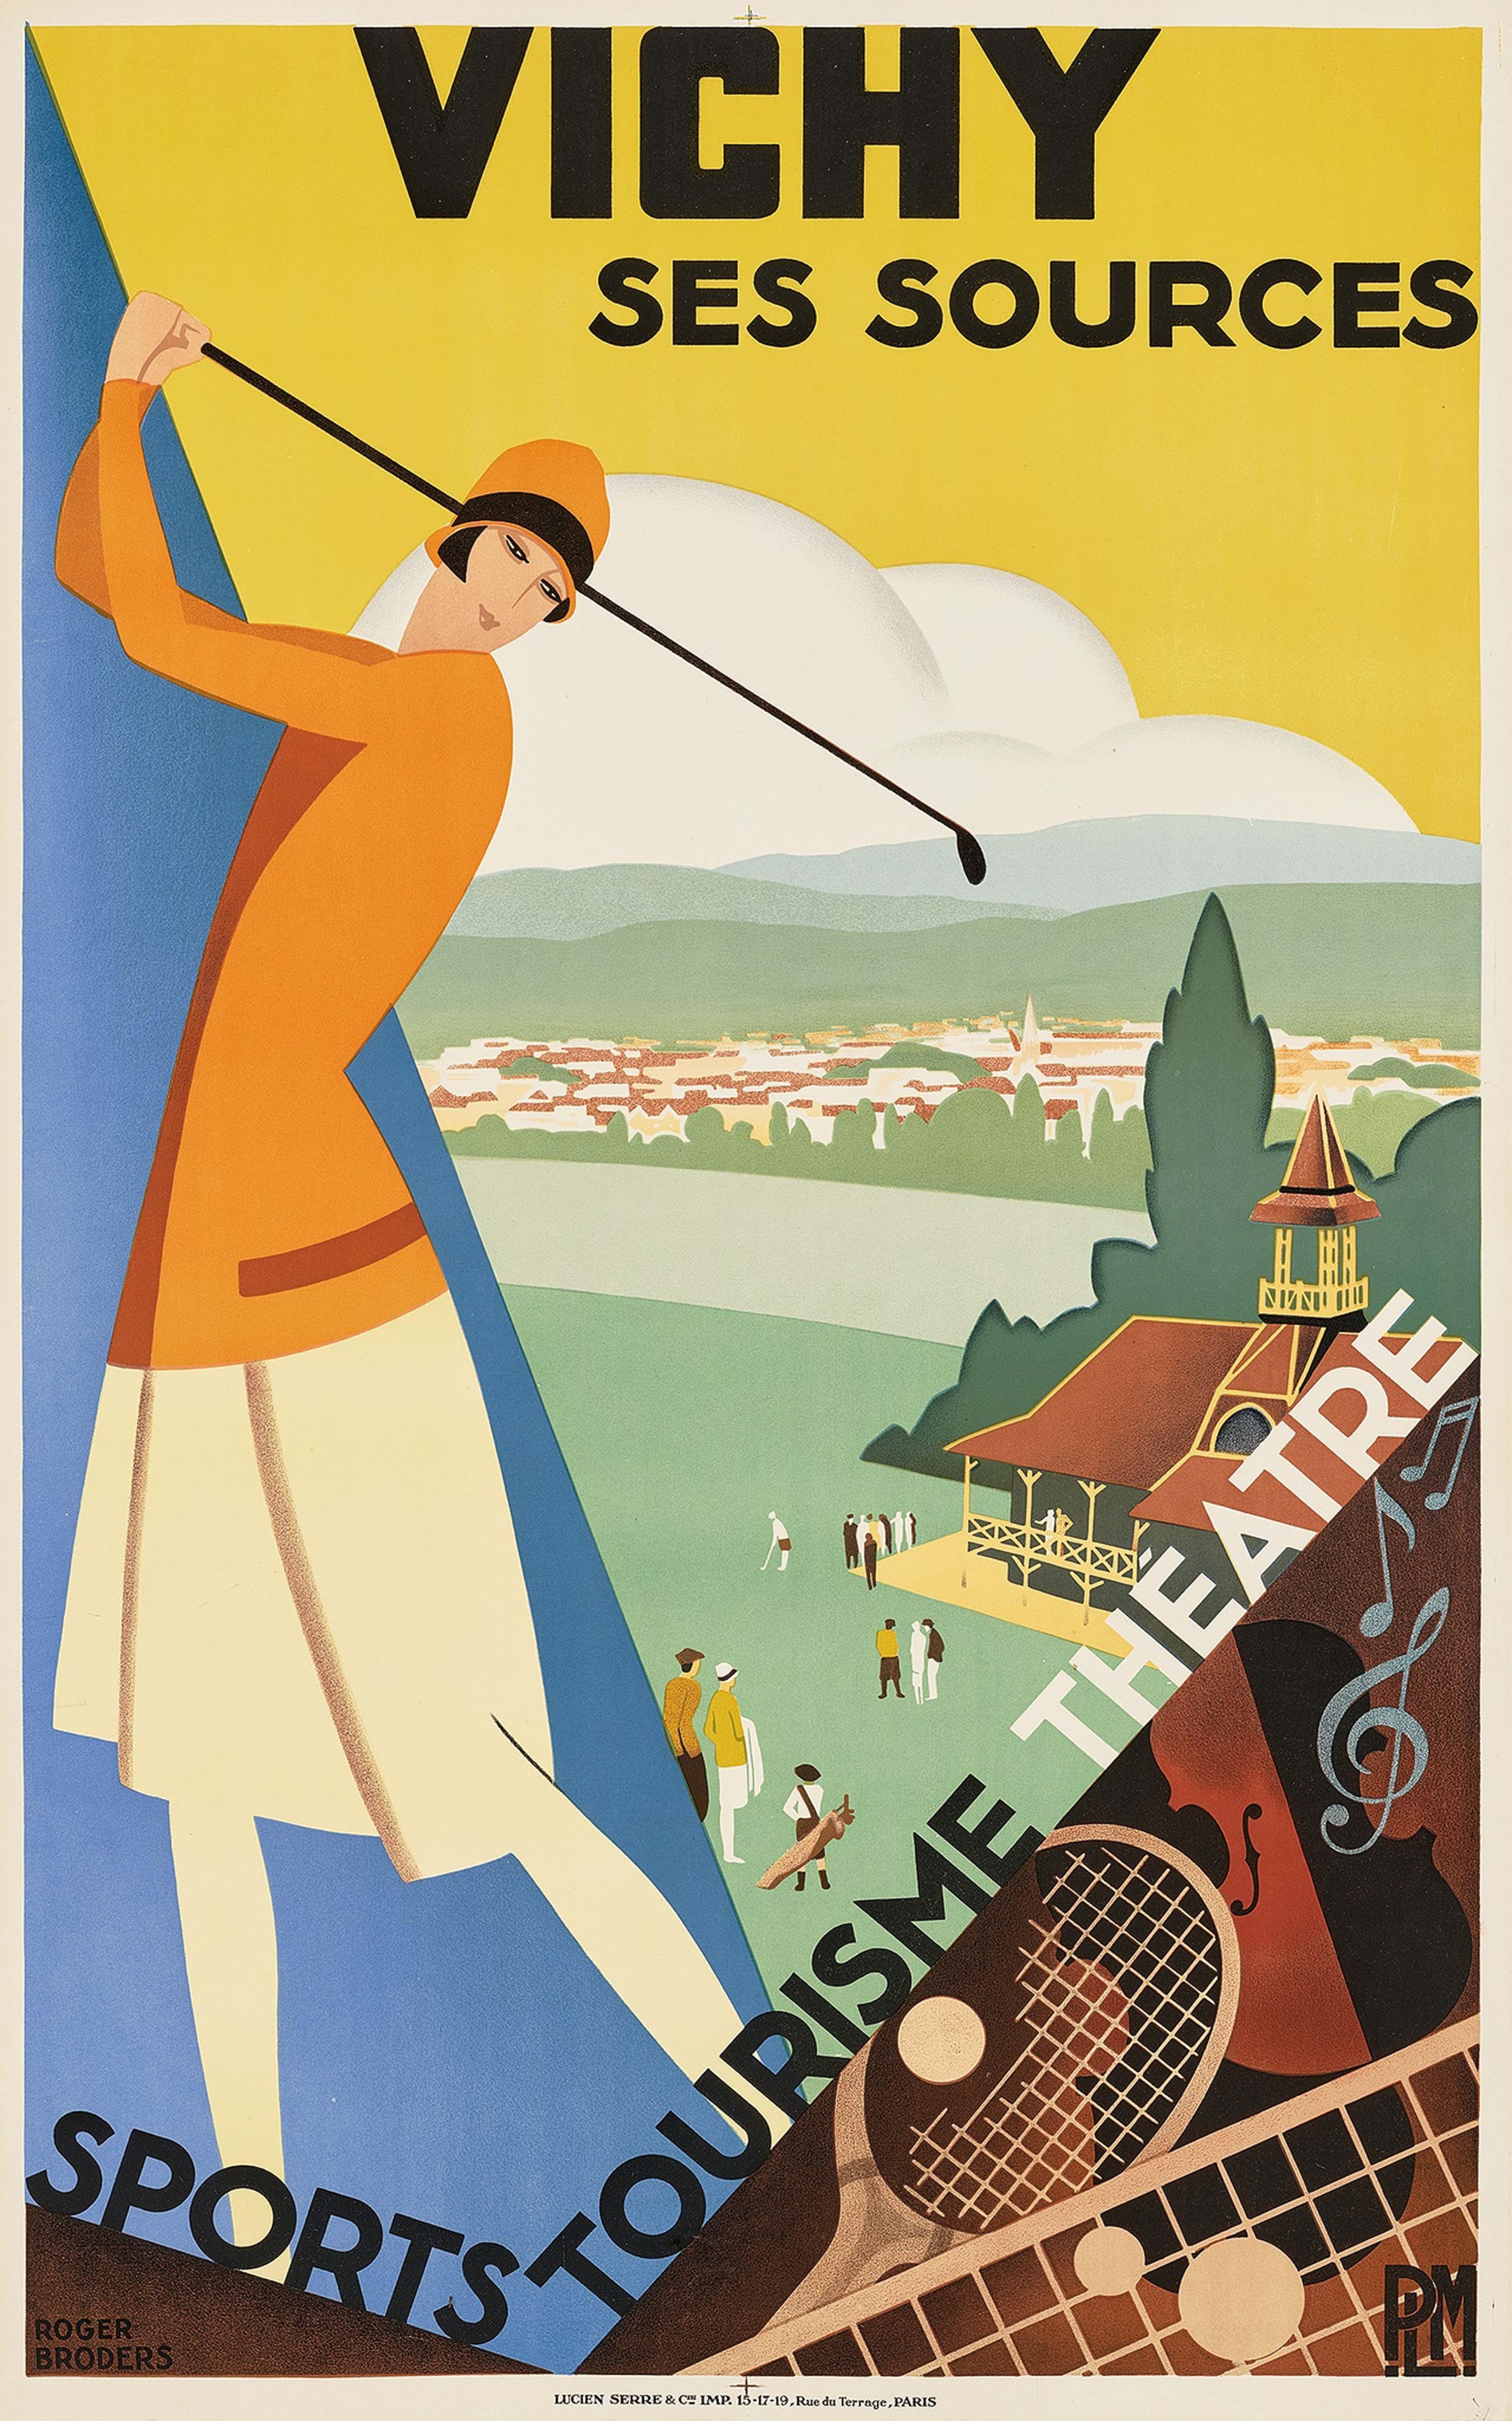 Roger Broders Print - Original Vintage PLM Paris Lyon Mediterranee Railway Travel Poster Vichy Golf